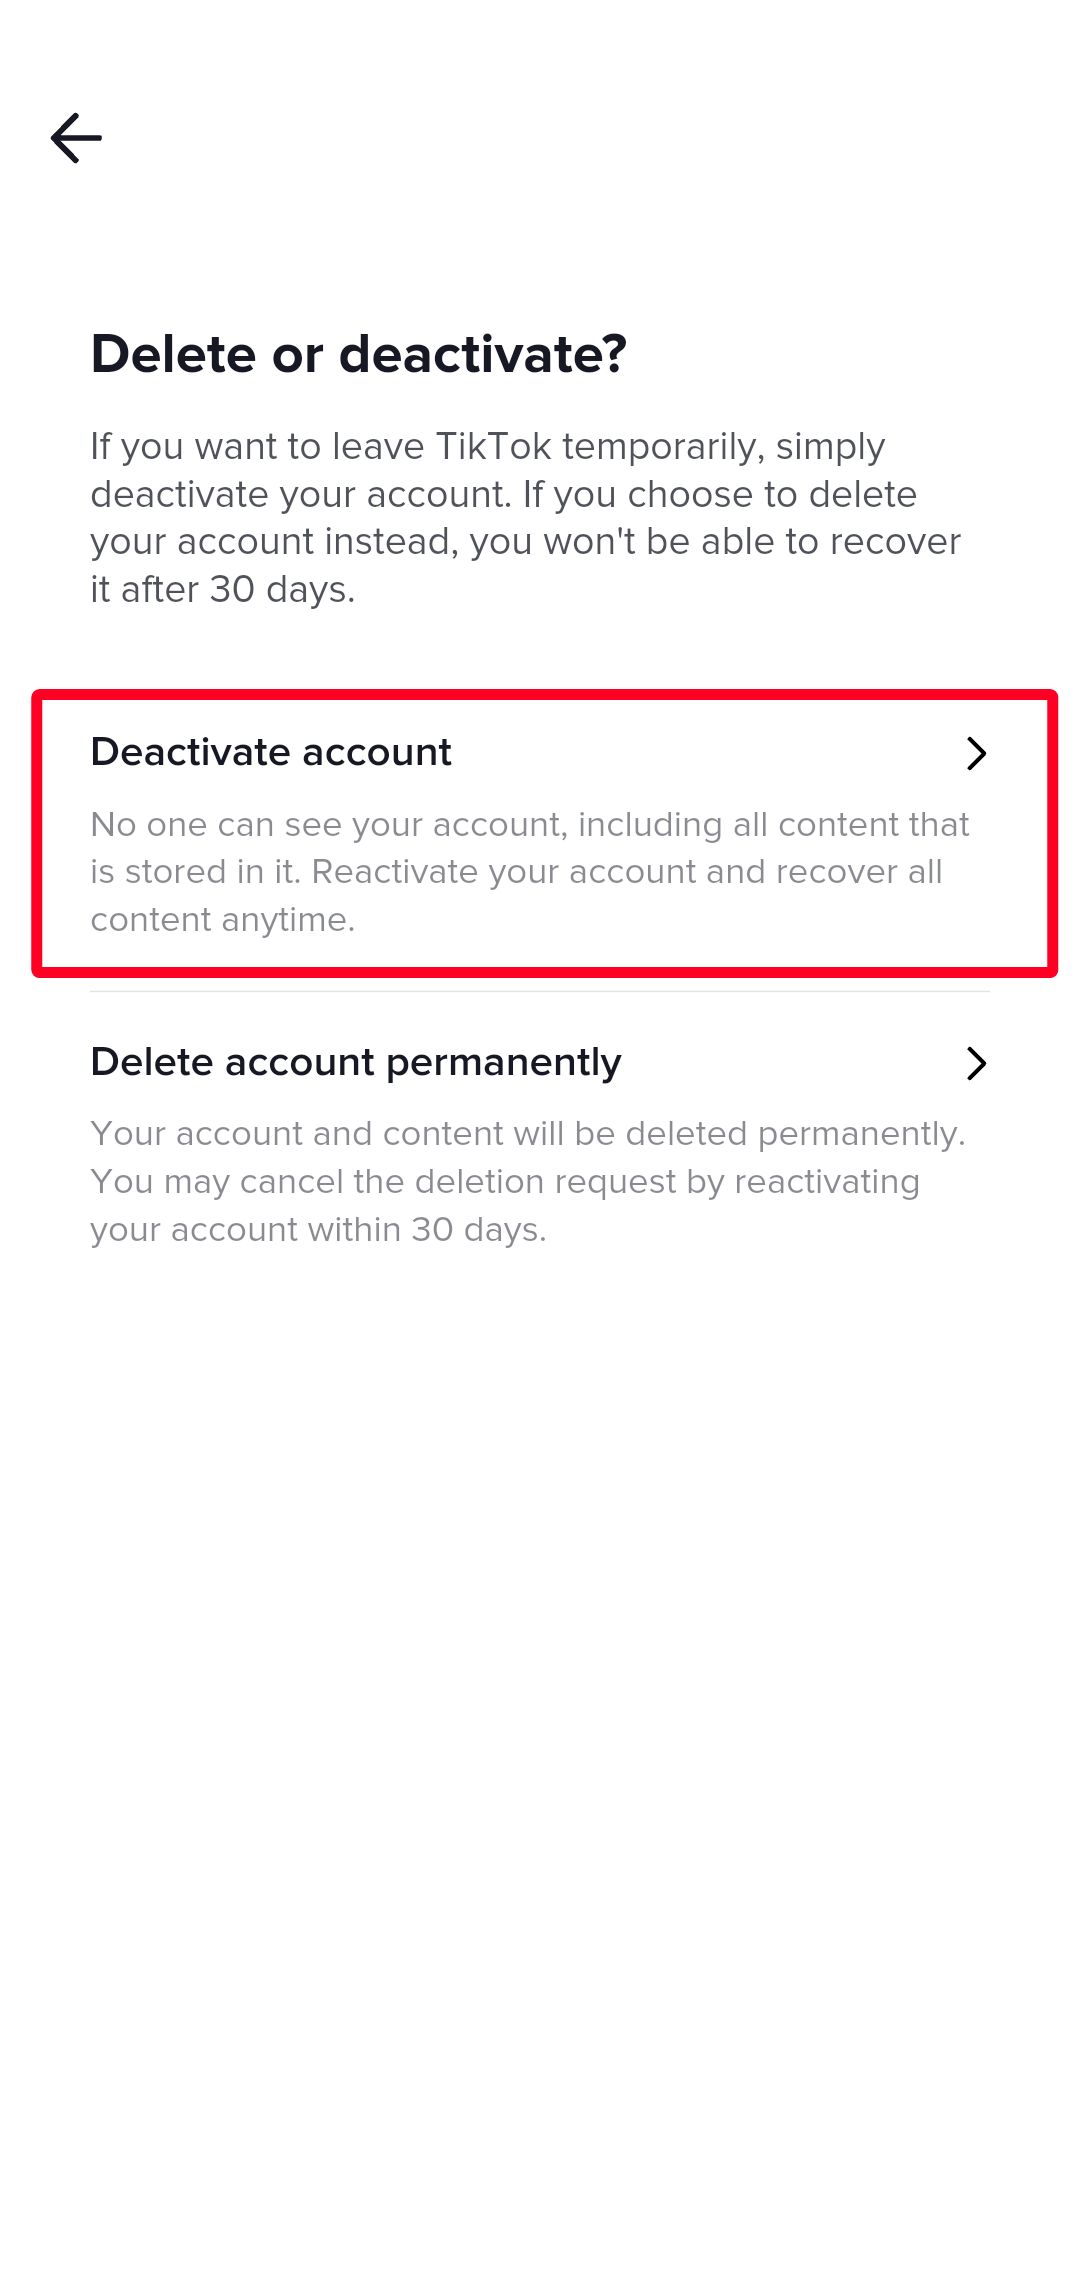 Deactivate account option in TikTok mobile app